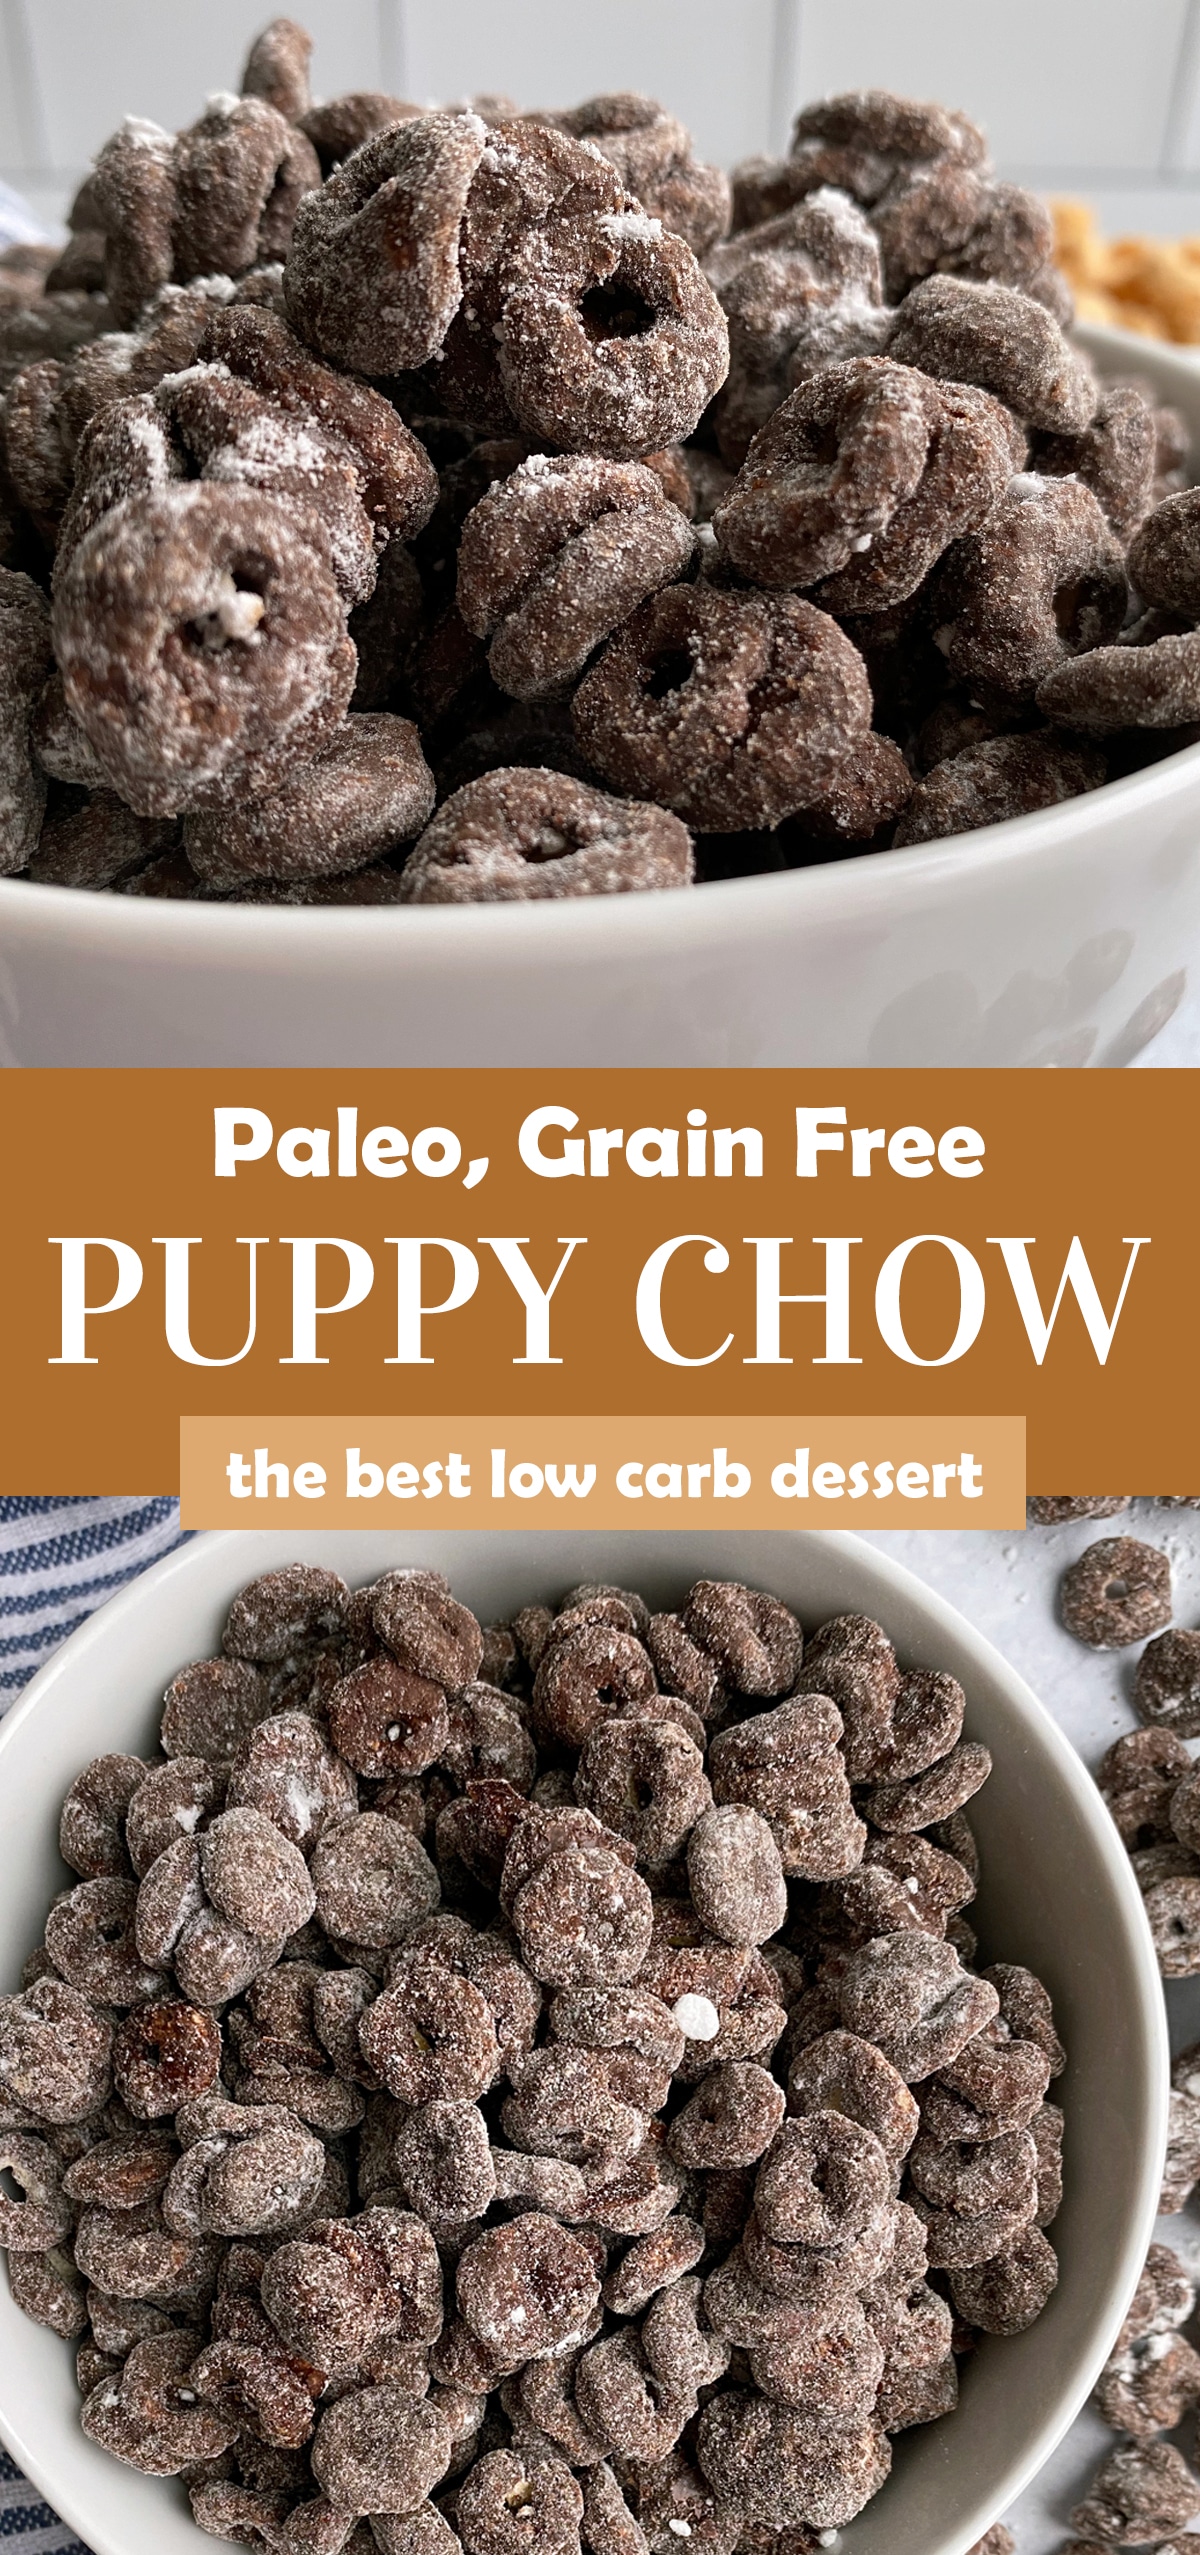 Grain-Free-Paleo-Puppy-Chow-Recipe-pinterest-image